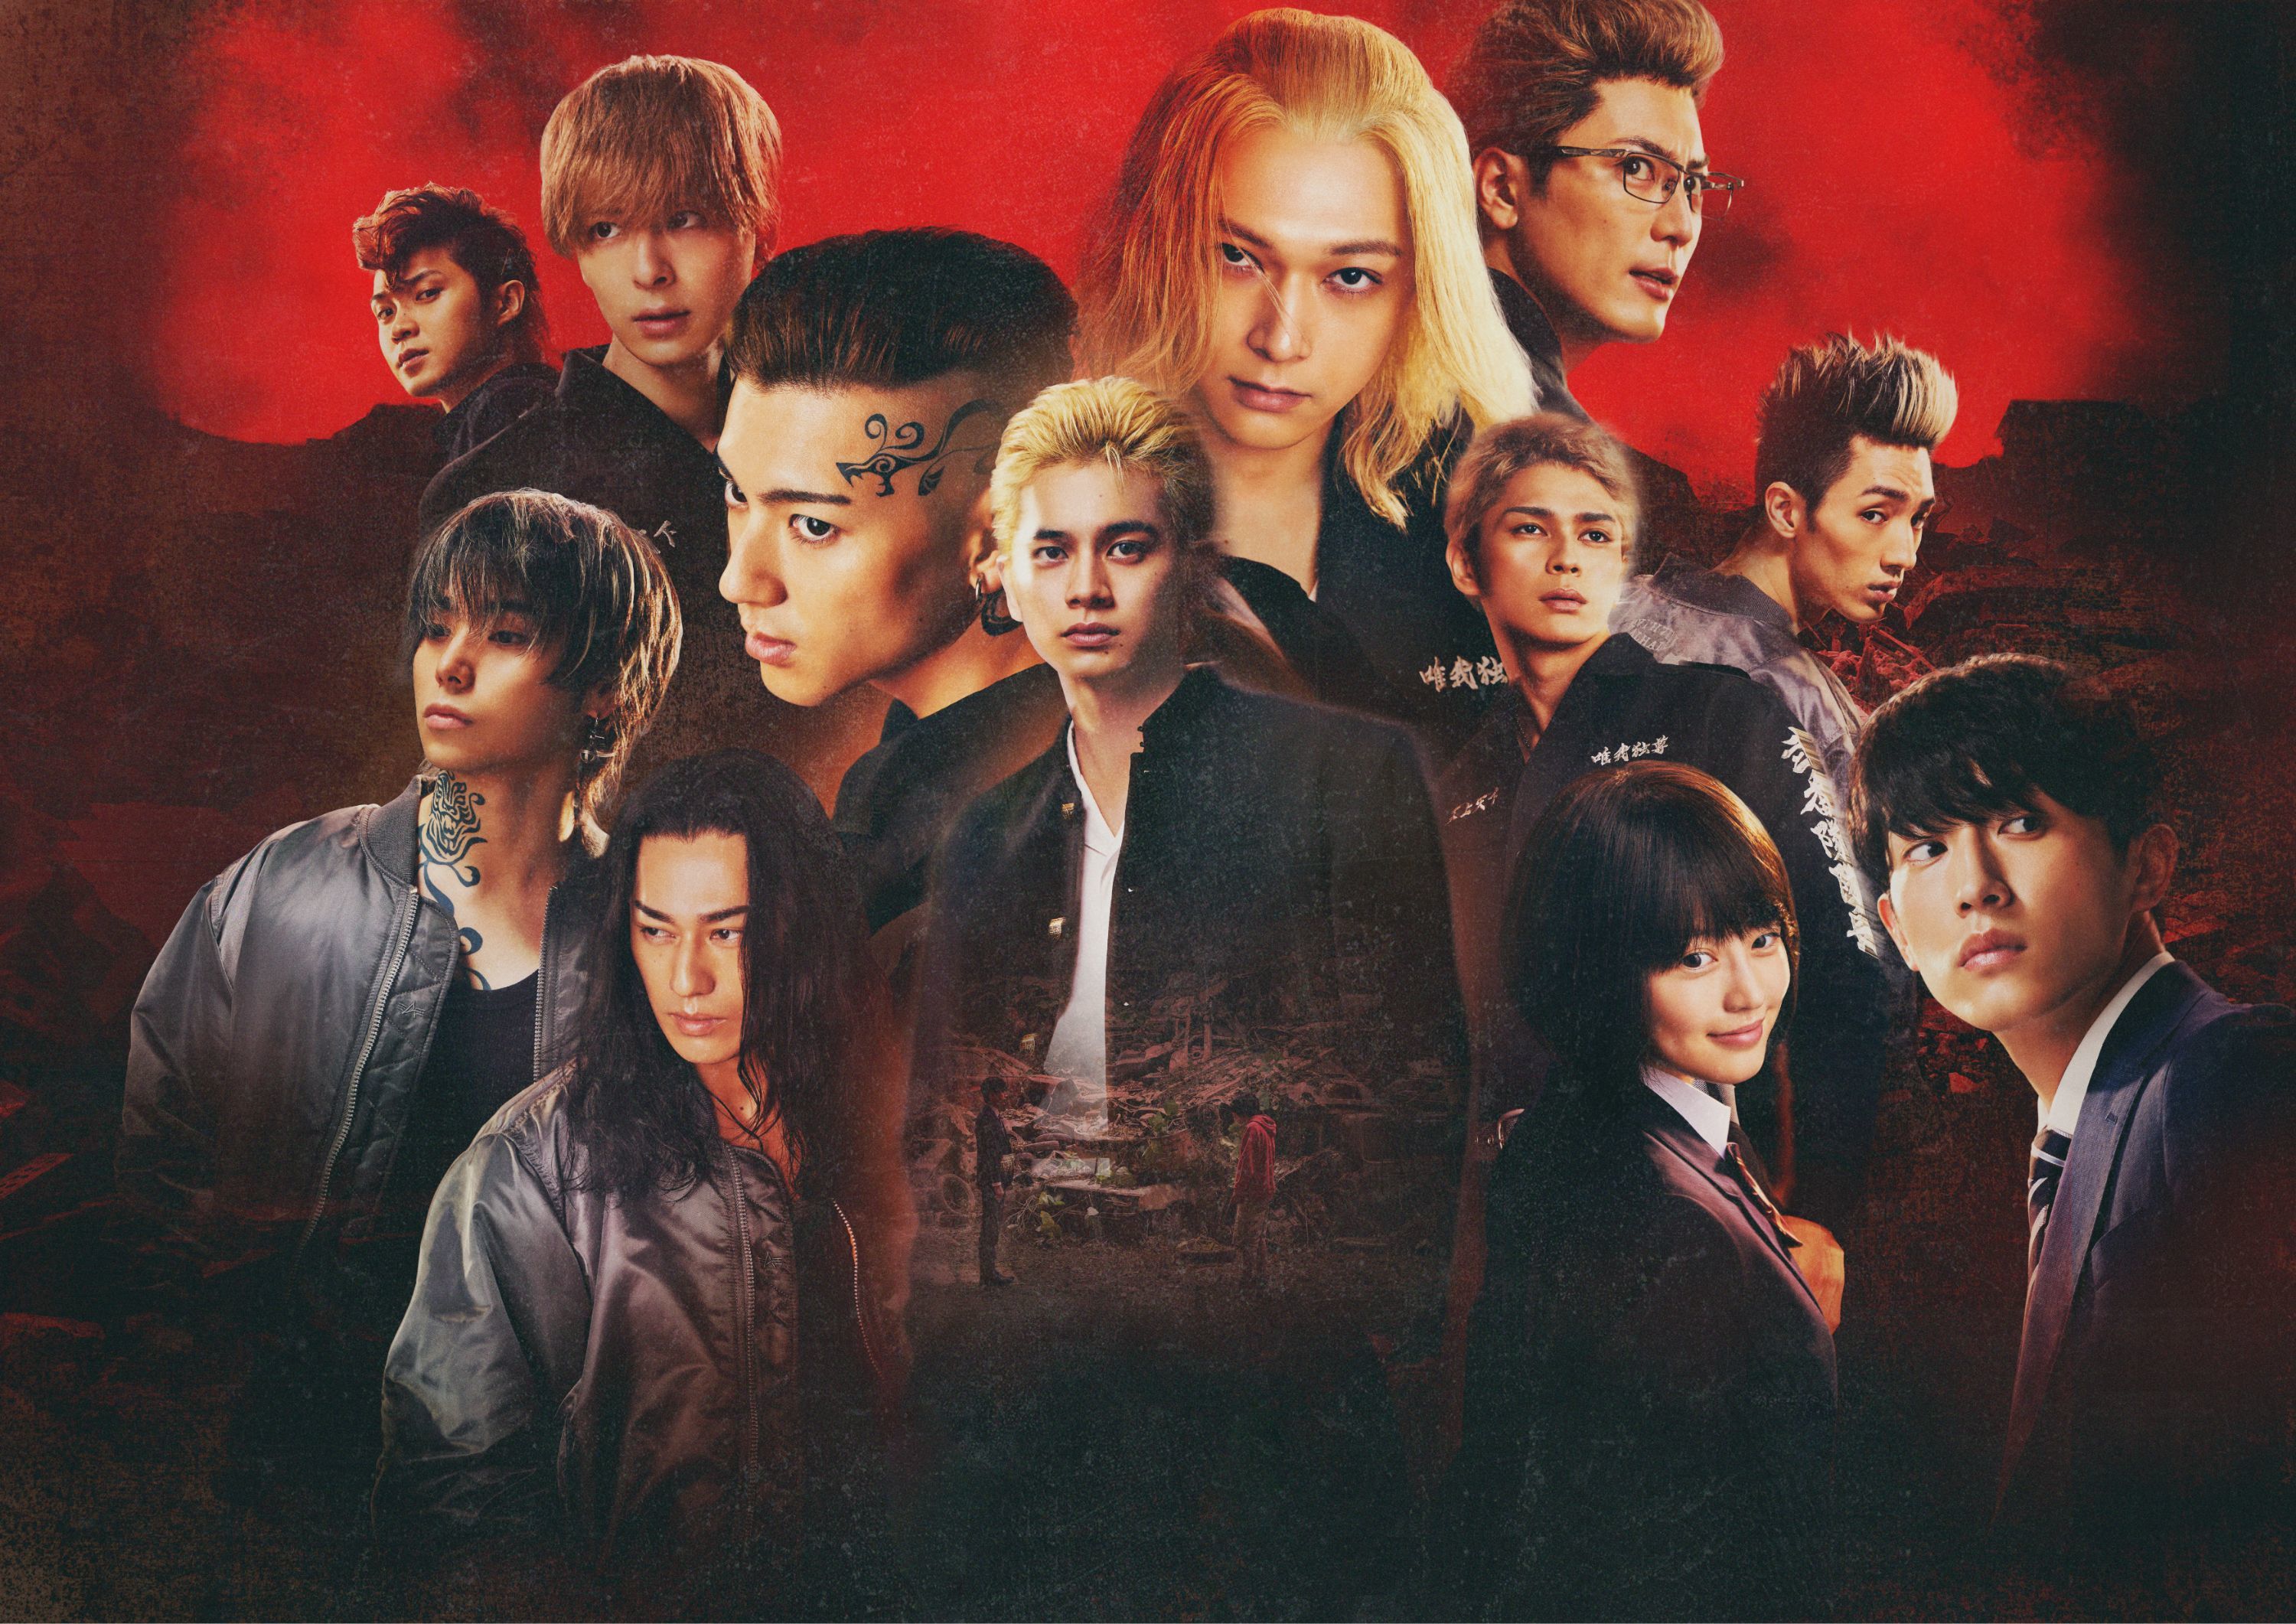 Live-Action Tokyo Revengers Film Reveals Cast, Director, October 9